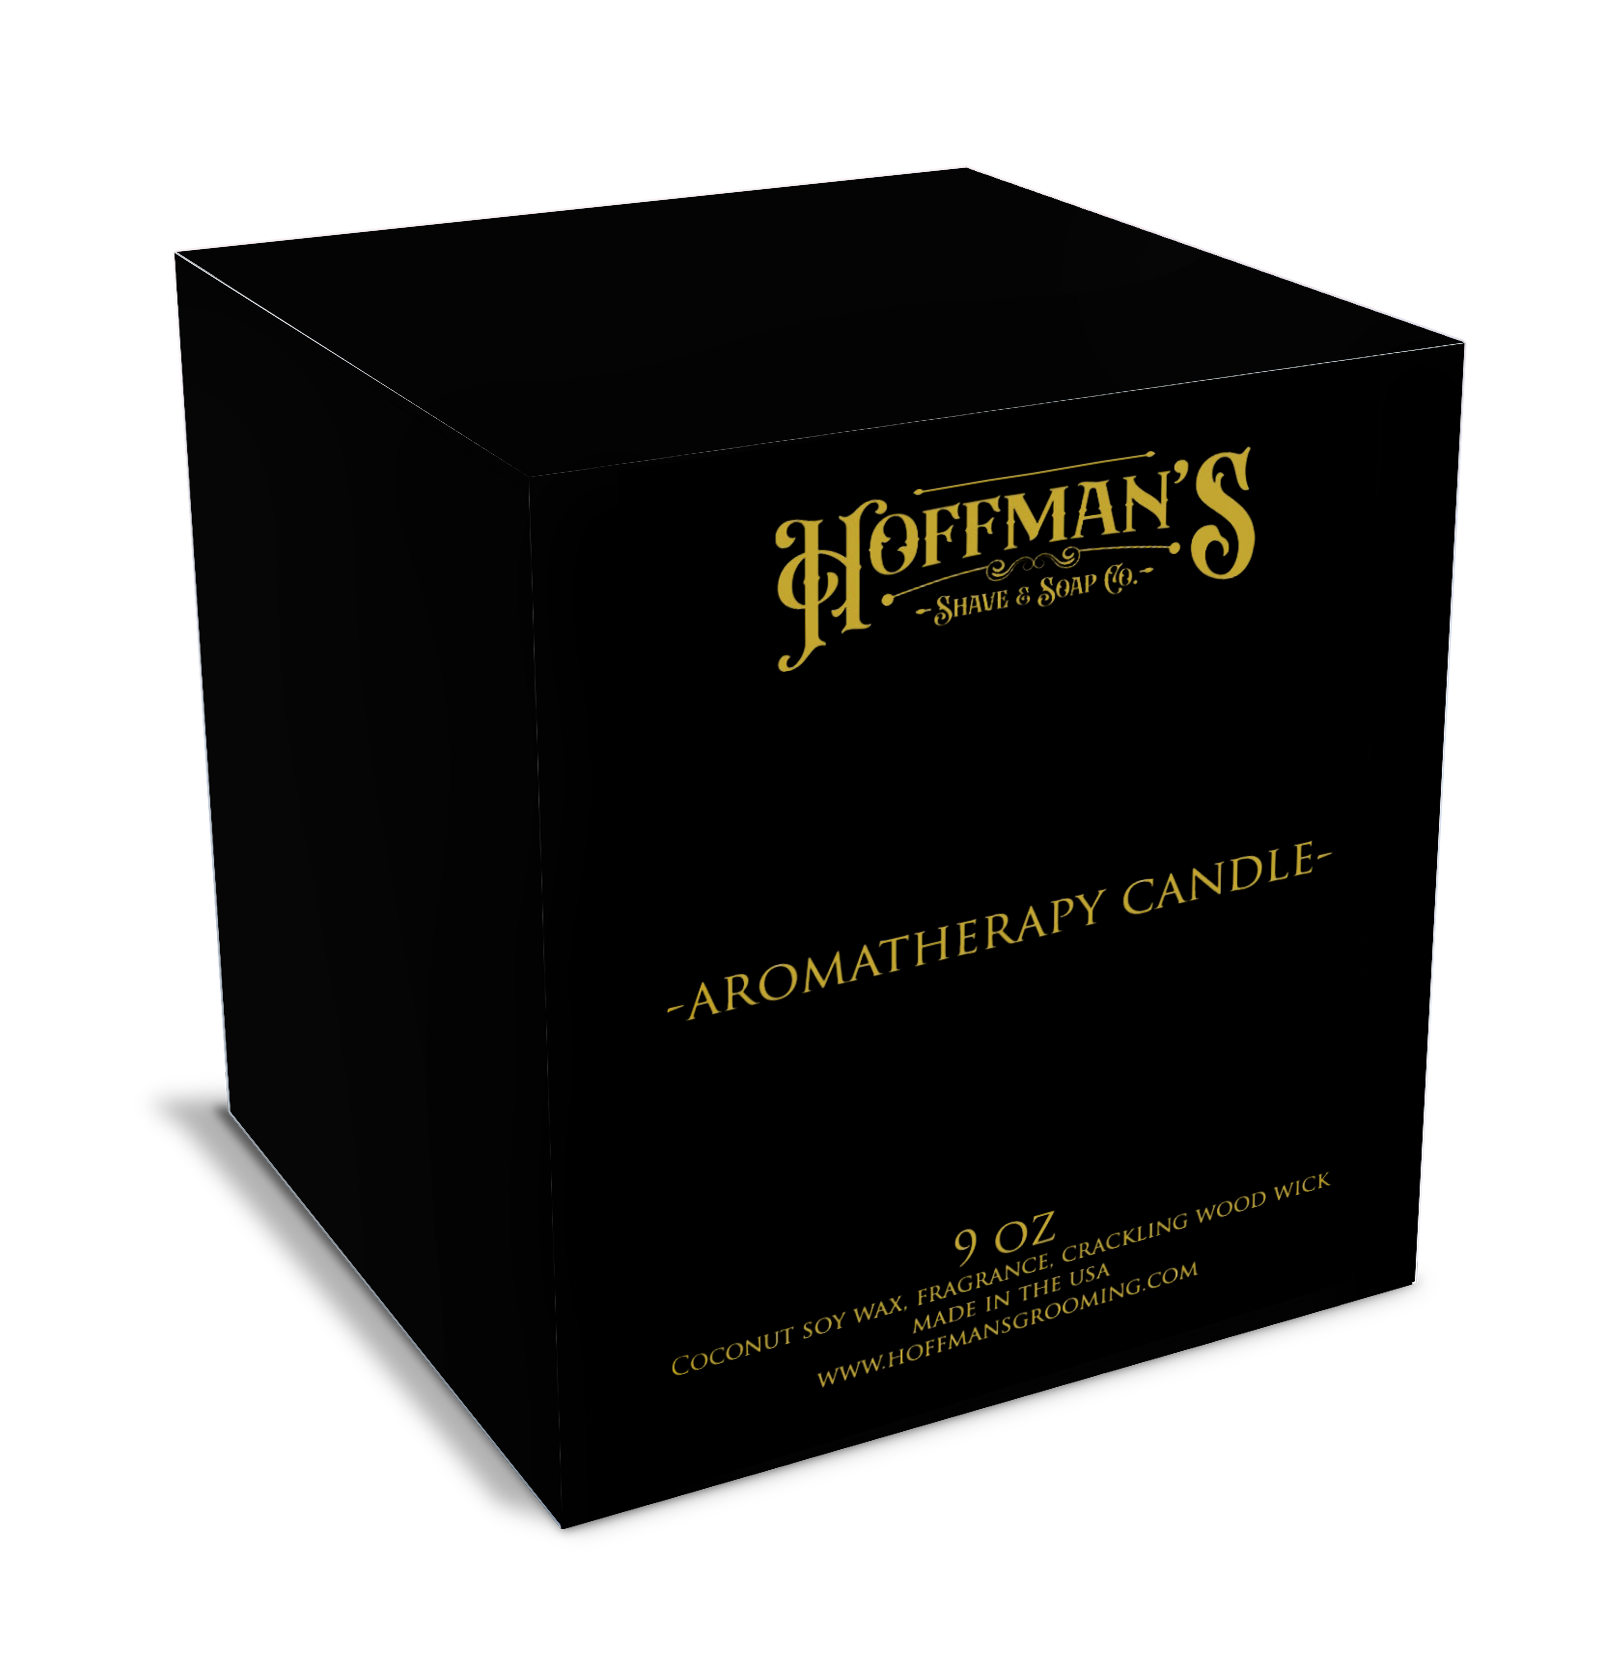 The Jersey Devil 9oz Aromatherapy Candle Box